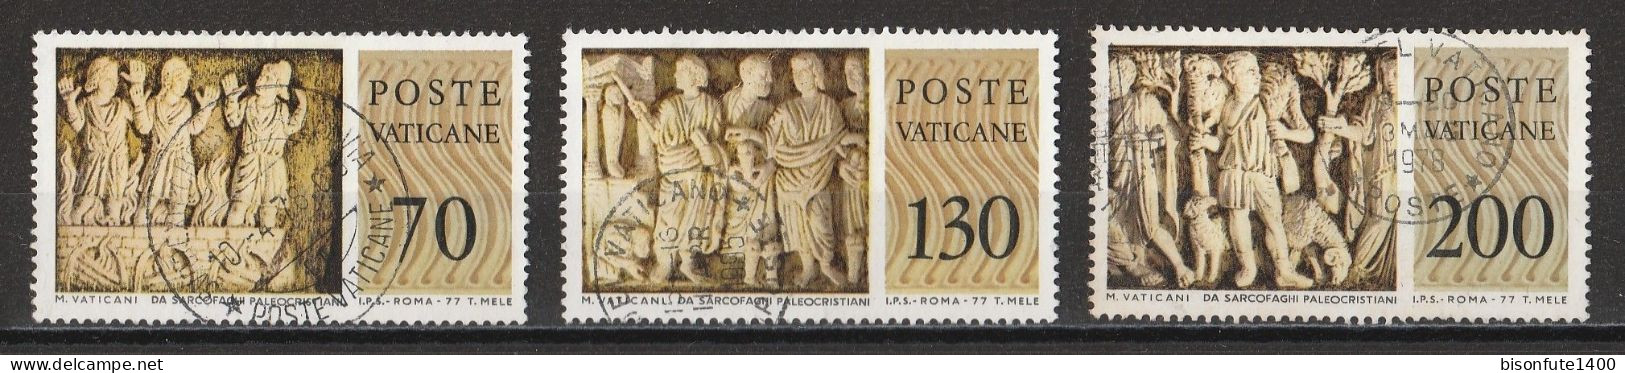 Vatican 1977 : Timbres Yvert & Tellier N° 636 - 638 - 642 - 643 - 646 - 648 Et 649 Oblitérés. - Usados